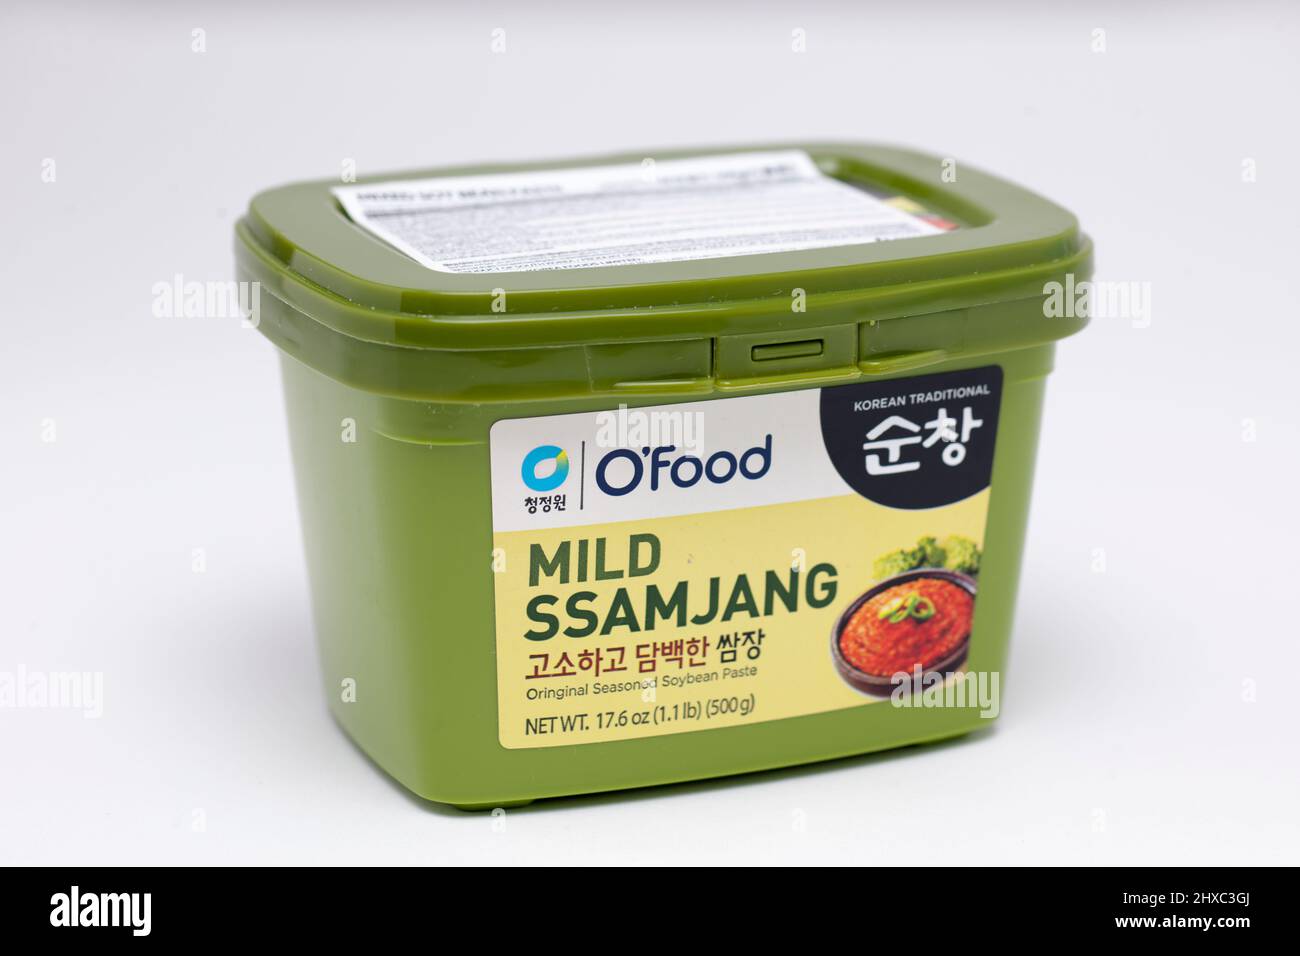 17.6 ounce Tub of Ofood Mild Ssamjang Stock Photo